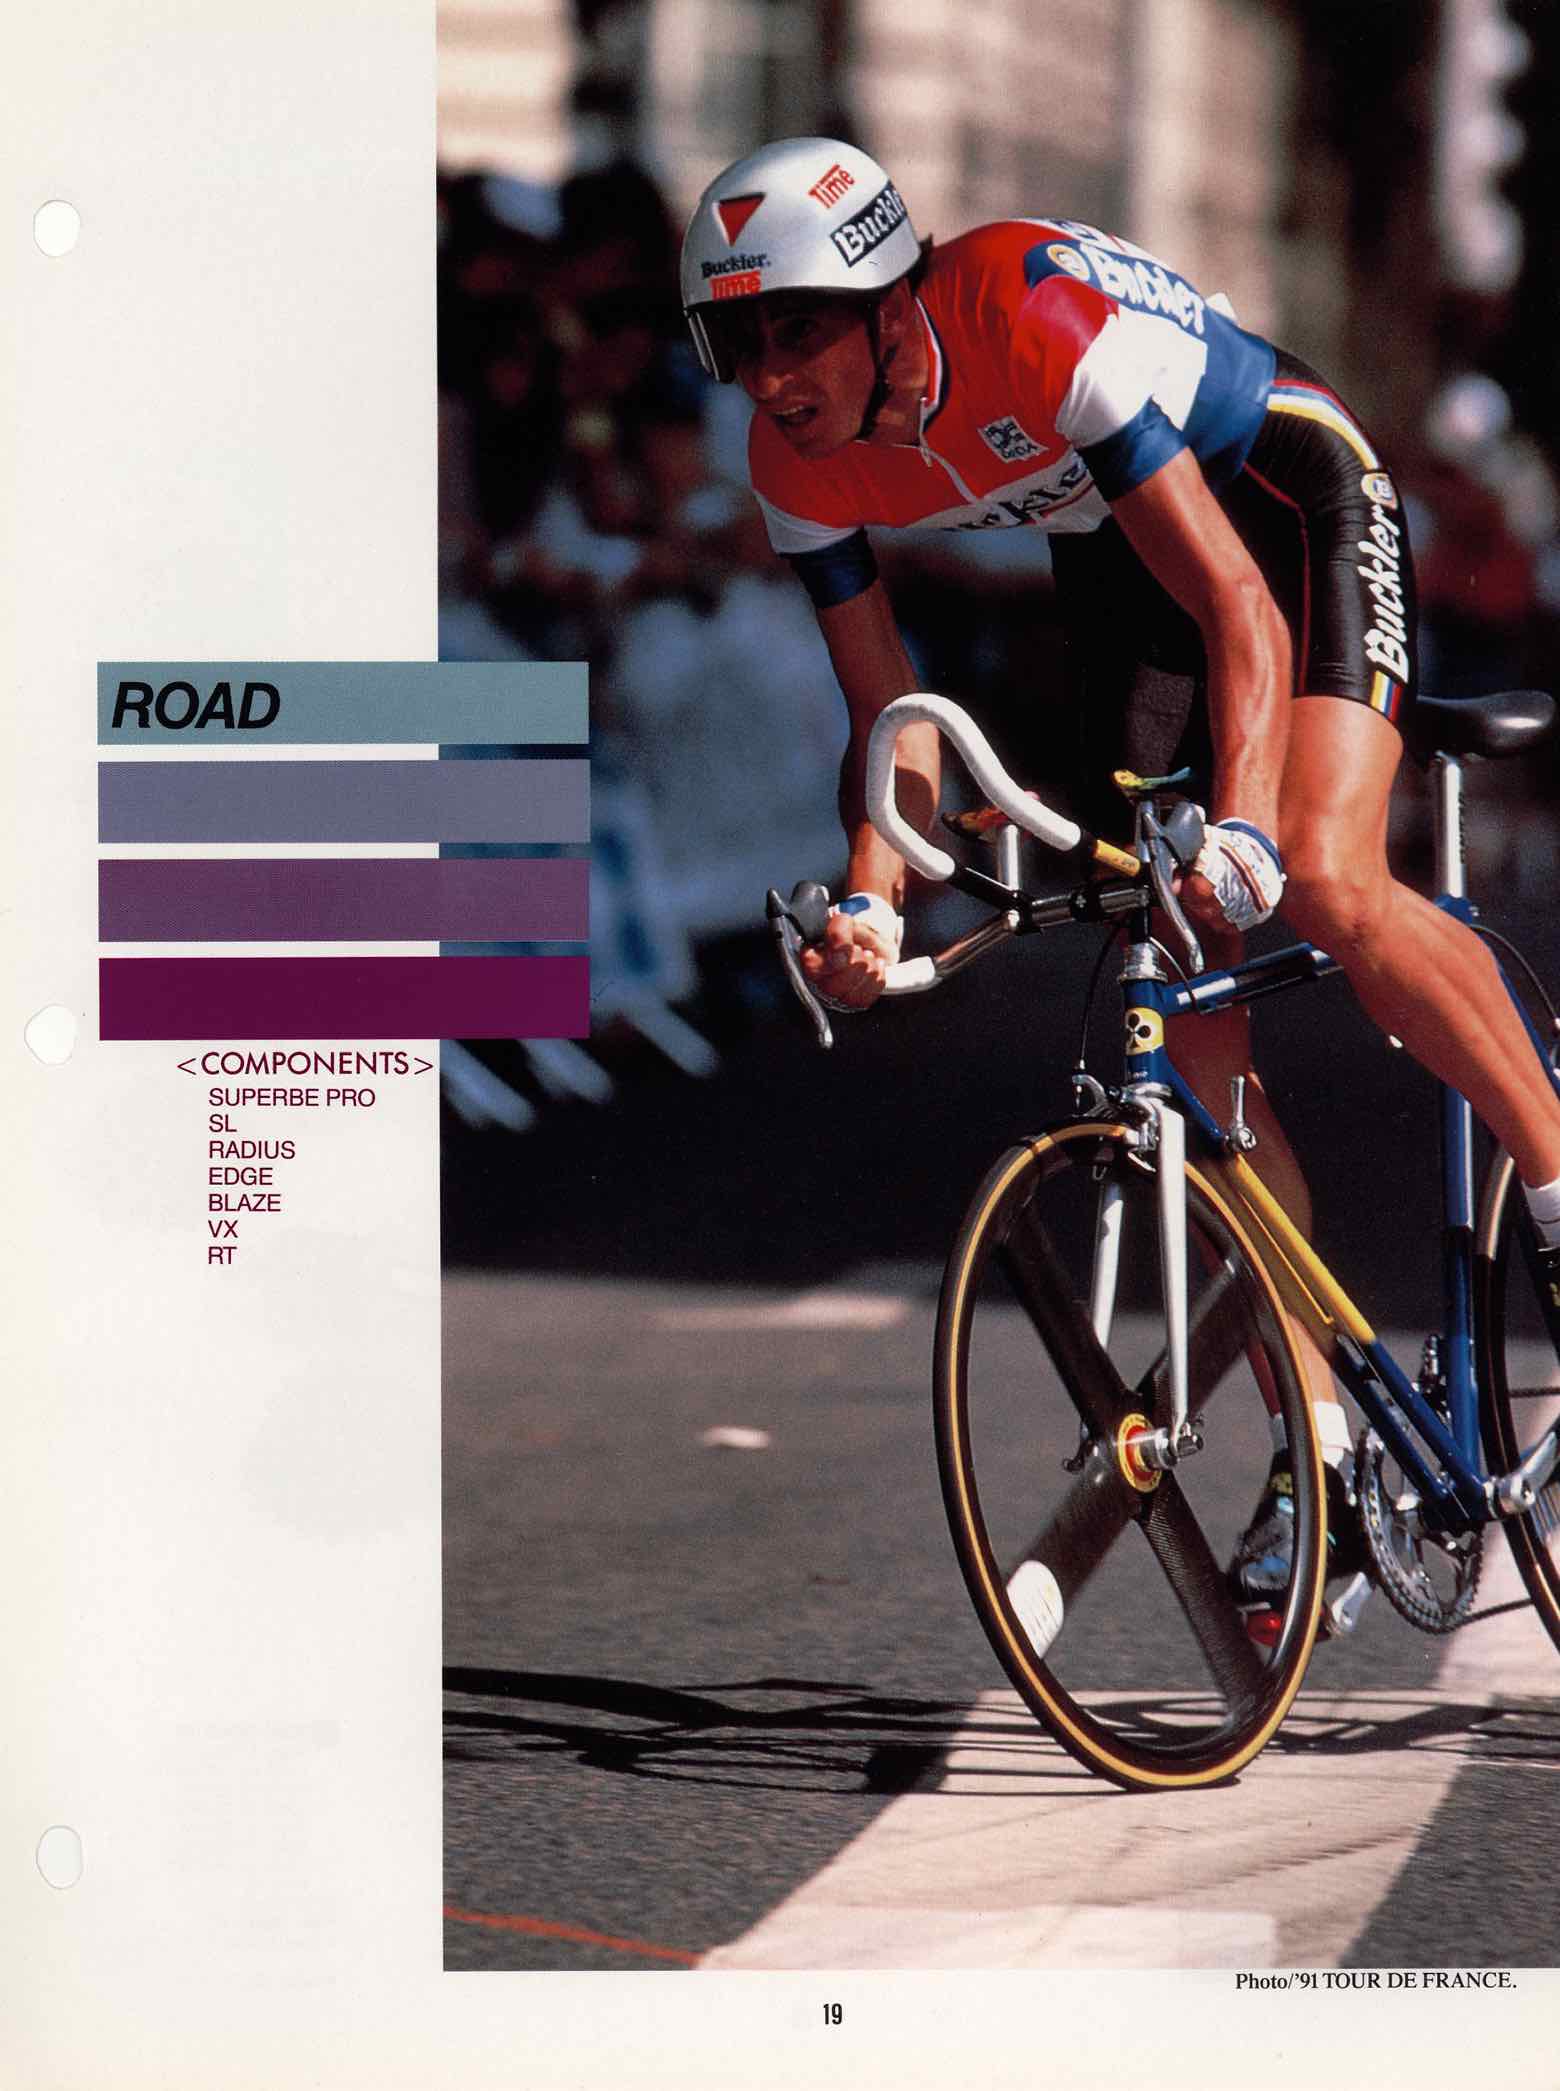 SunTour Bicycle Equipment Catalog 1992 - Page 19 main image